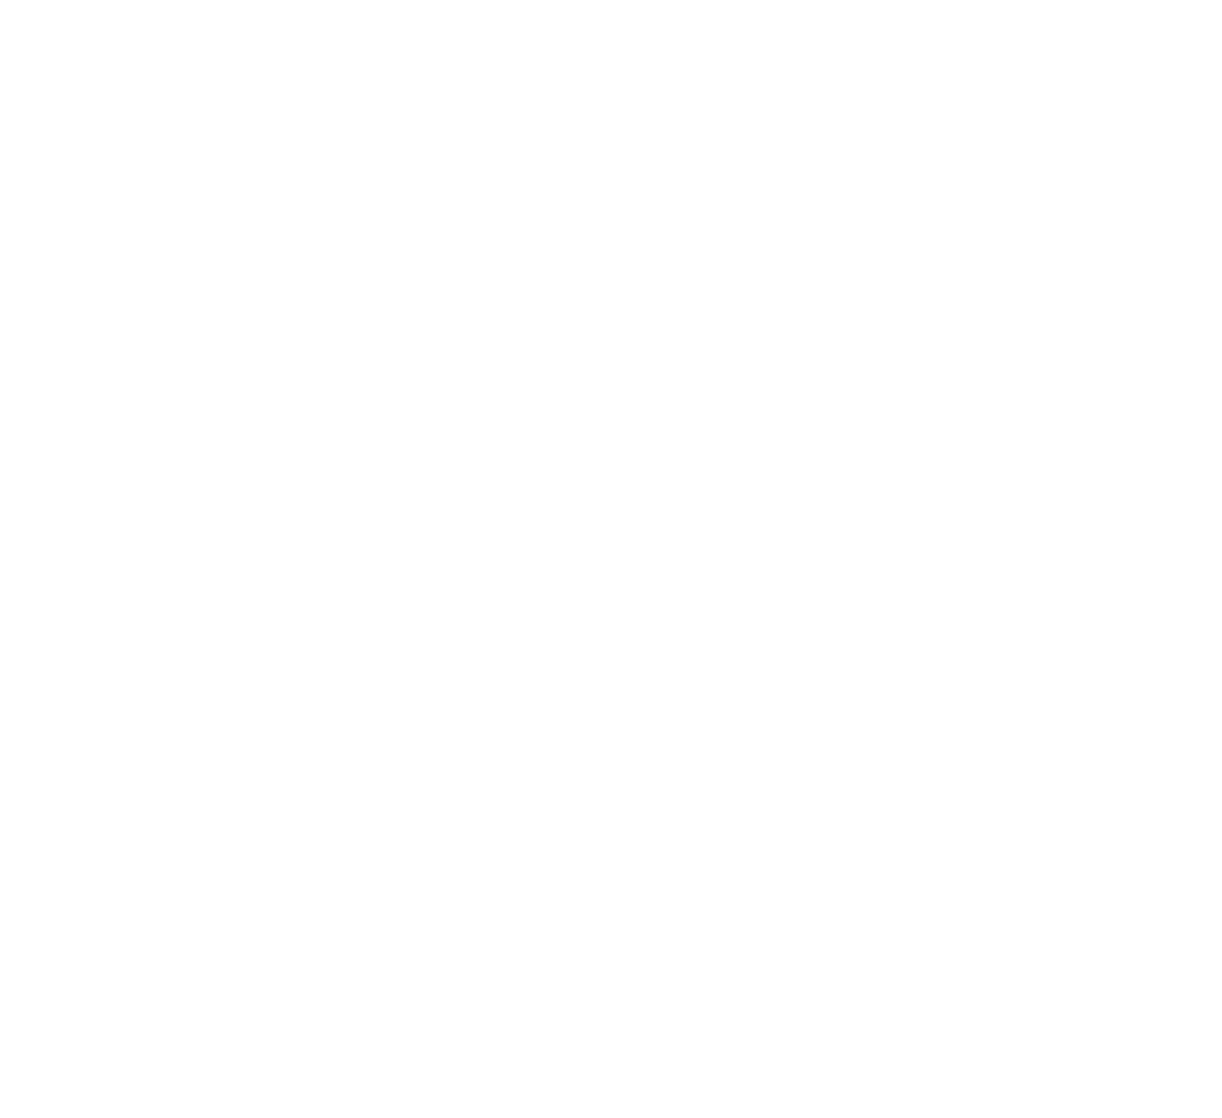 The Jobsite logo